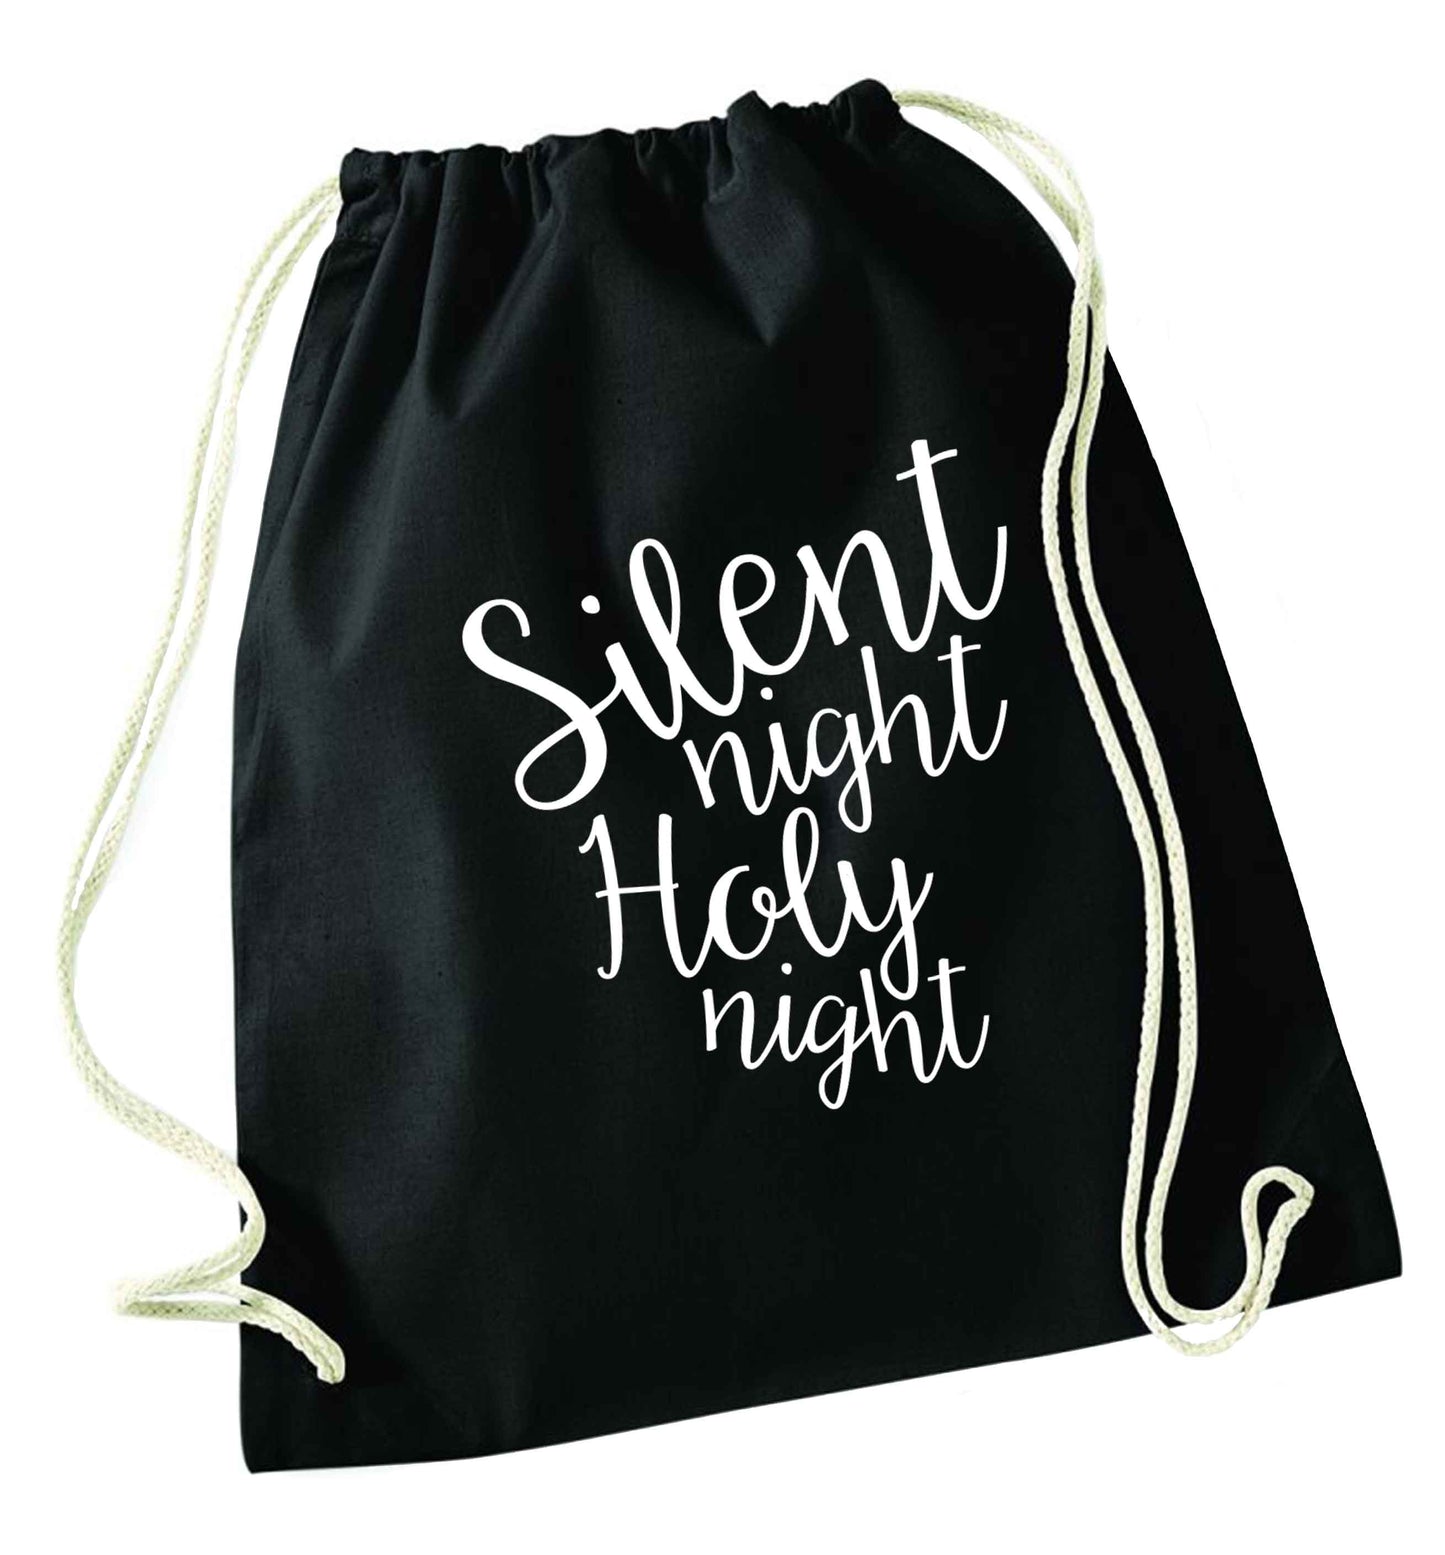 Silent night holy night black drawstring bag